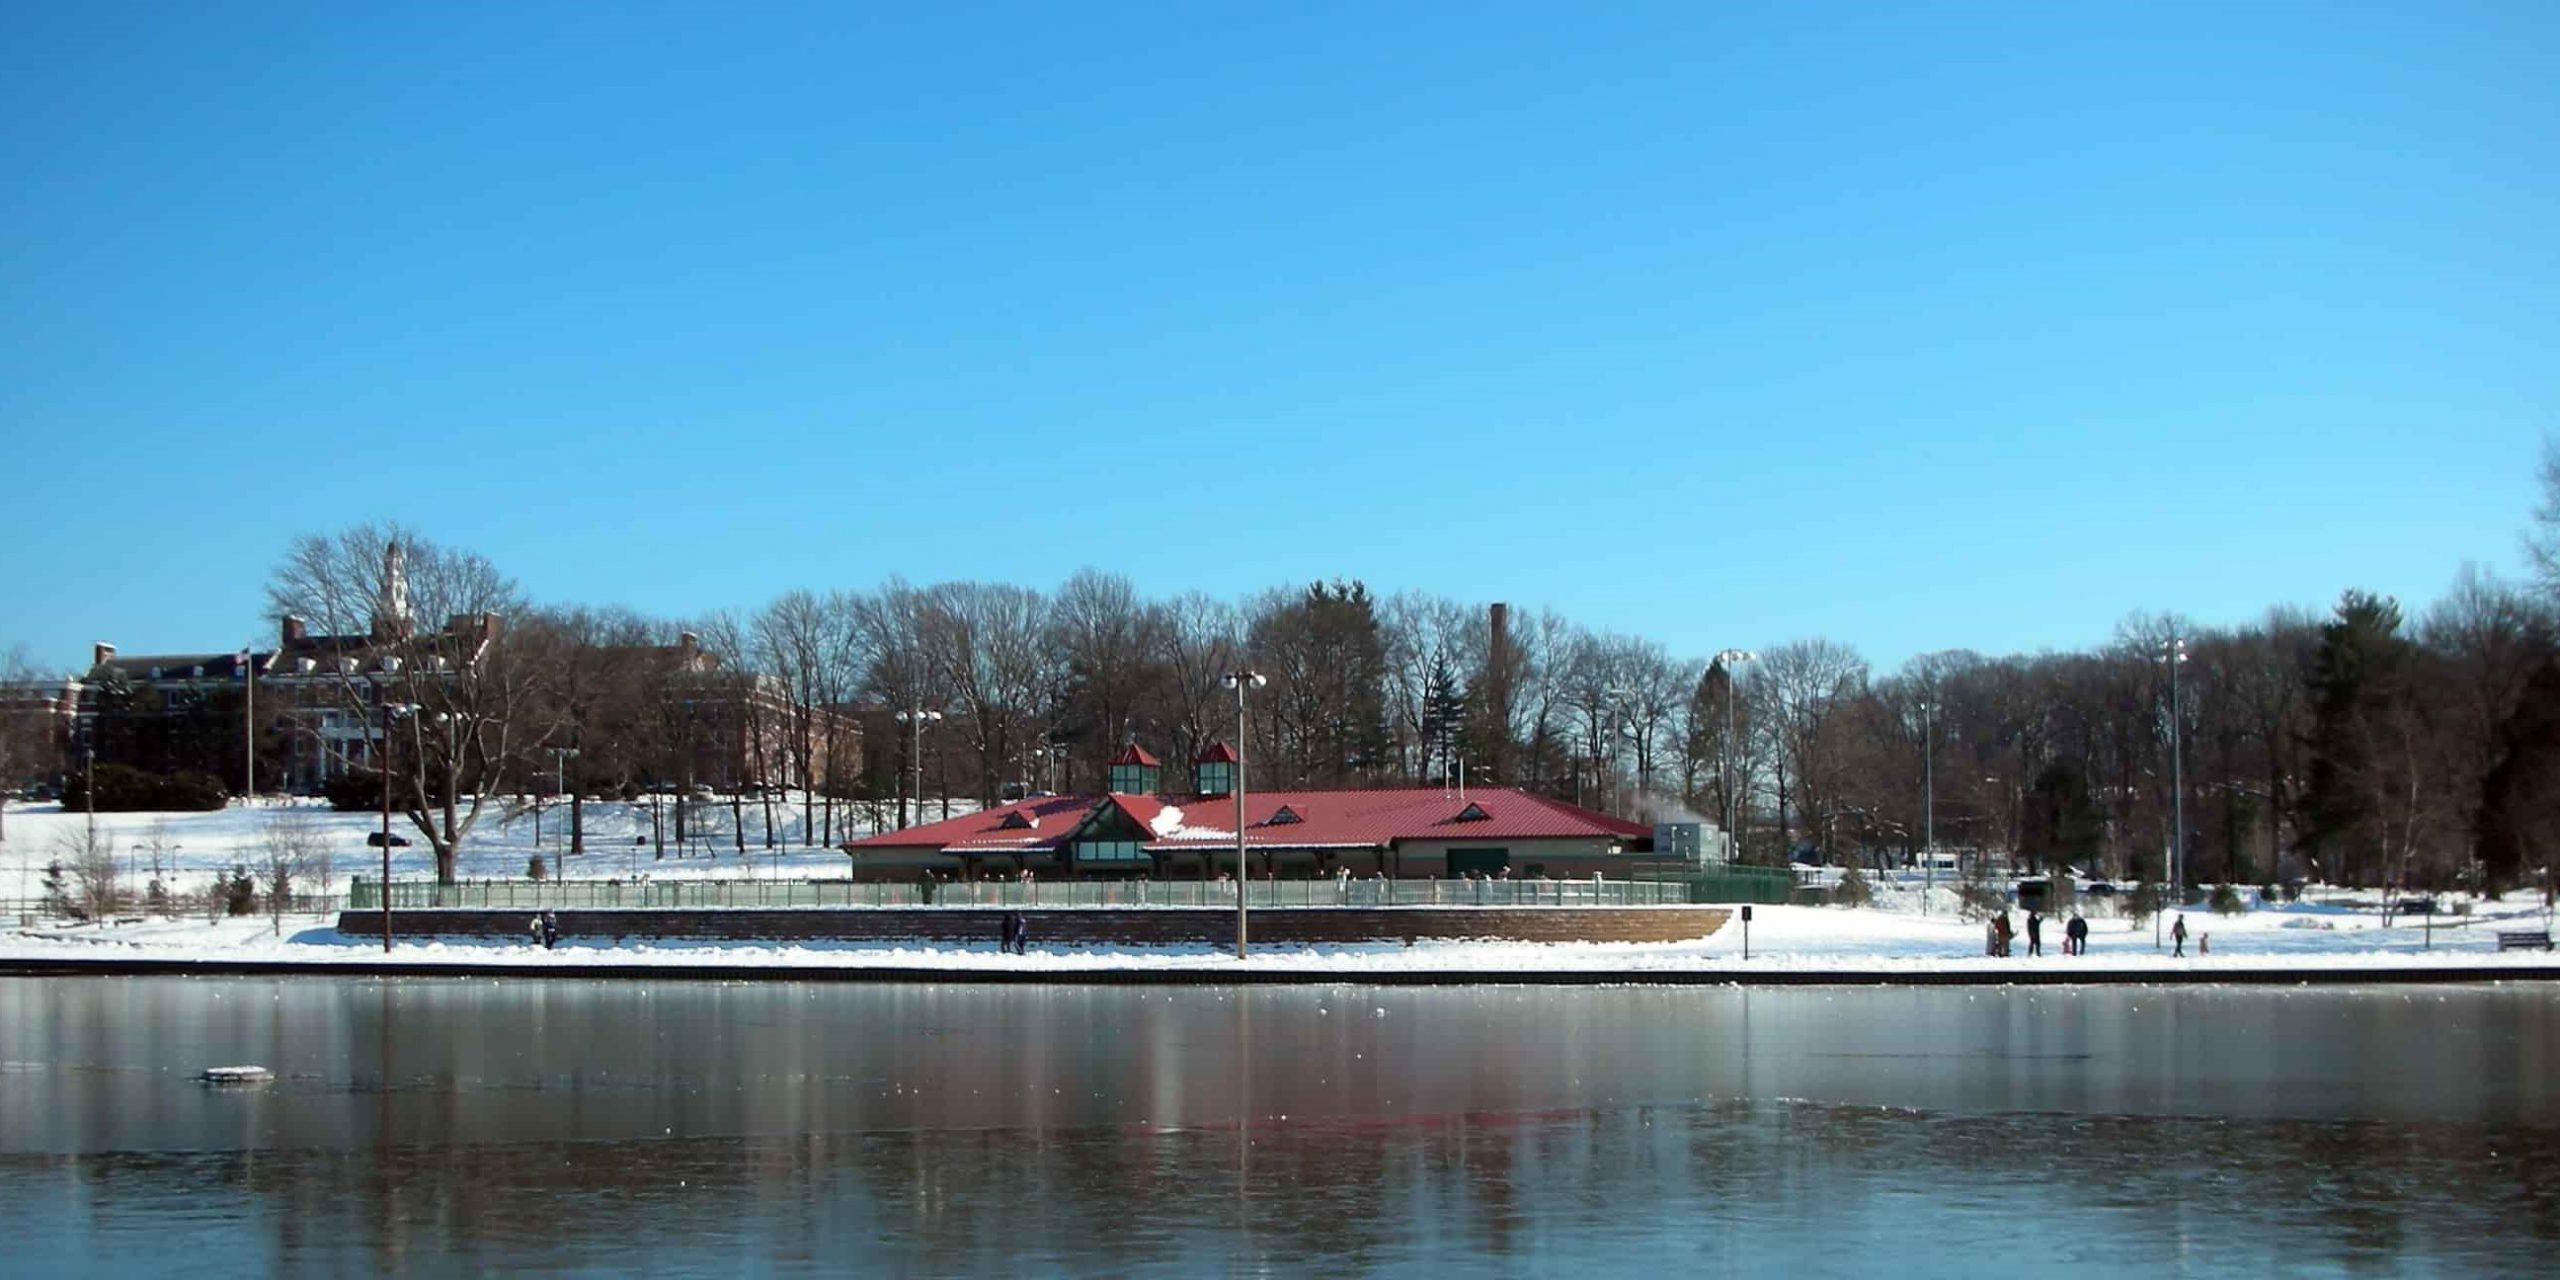 Image of Roosevelt Park in edison nj during winter